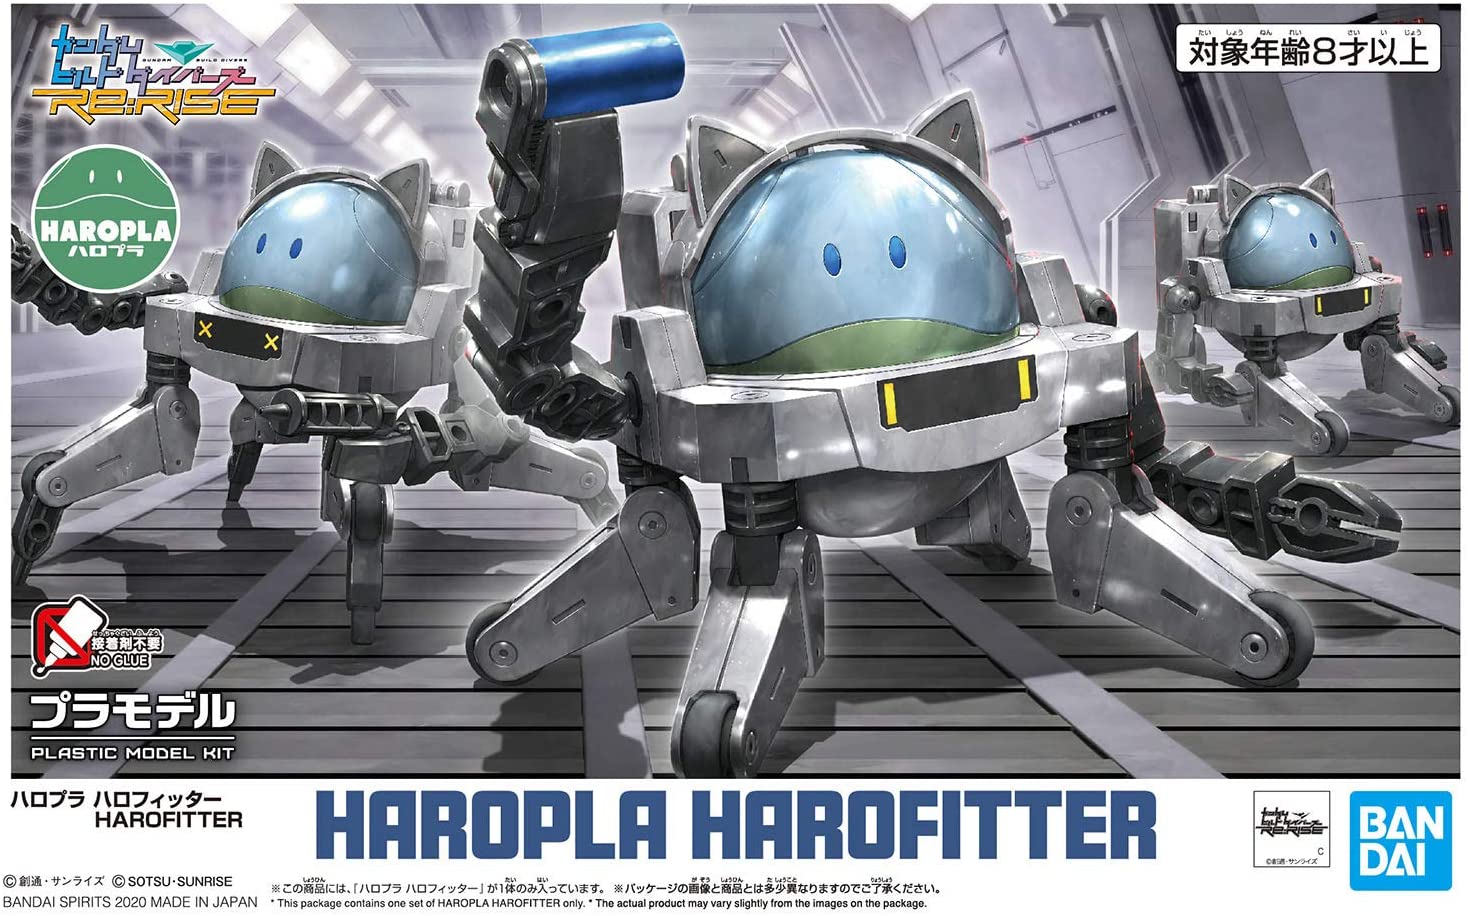 Gundam #14 Harofitter, Bandai Spirits HaroPla